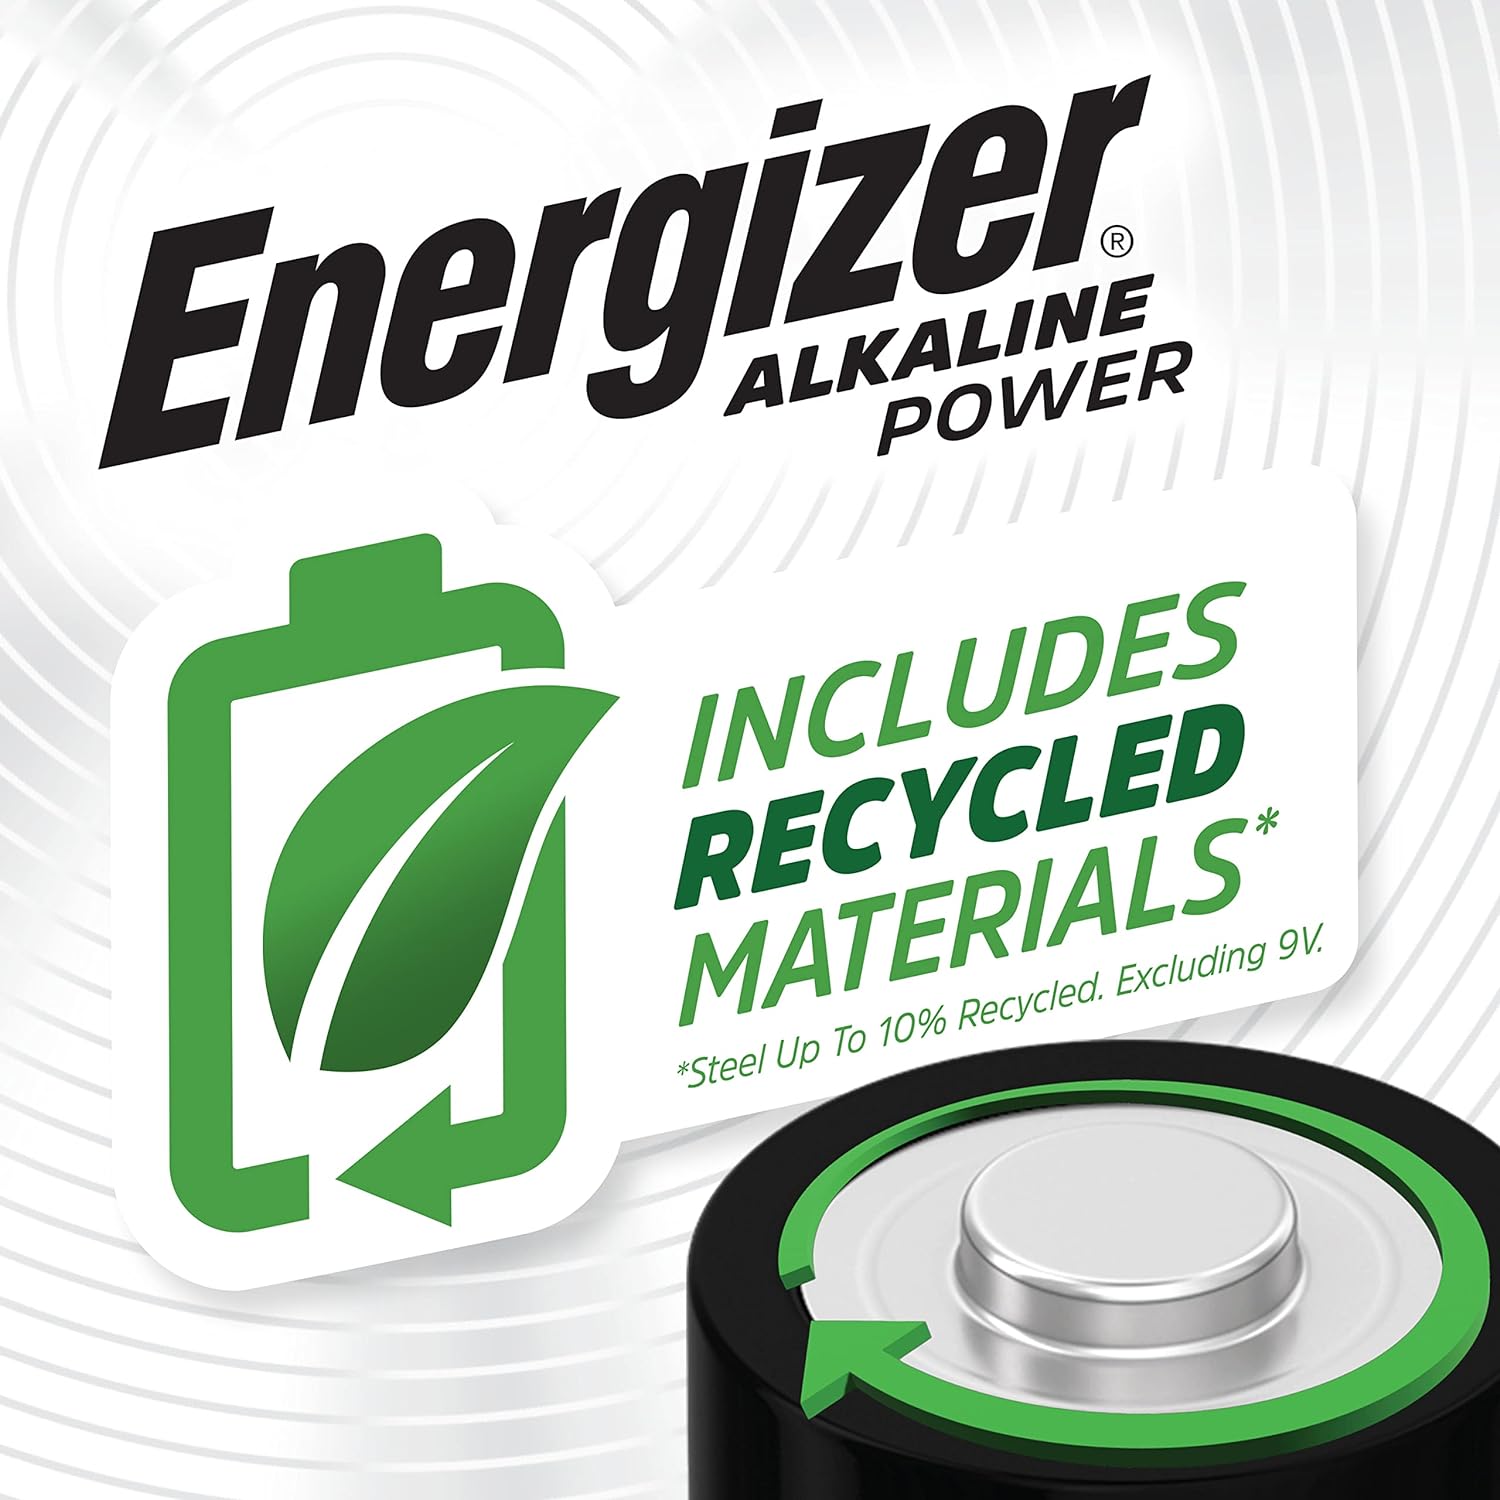 Energizer AA Batteries, Alkaline Power Double A Battery Alkaline, 32 Count